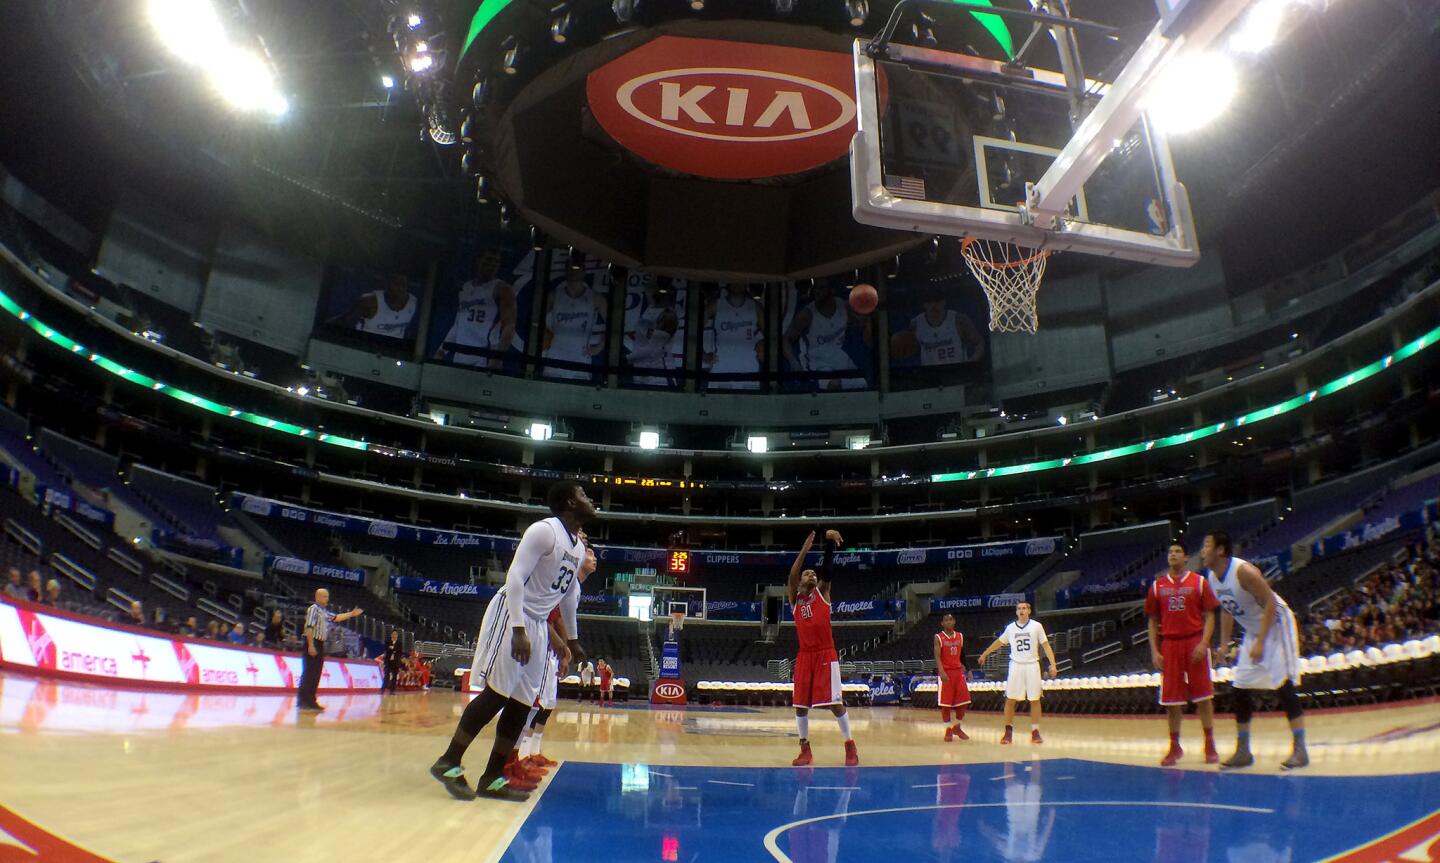 Photo Gallery: Bell-Jeff boys basketball vs. San Gabriel Academy at Staples Center